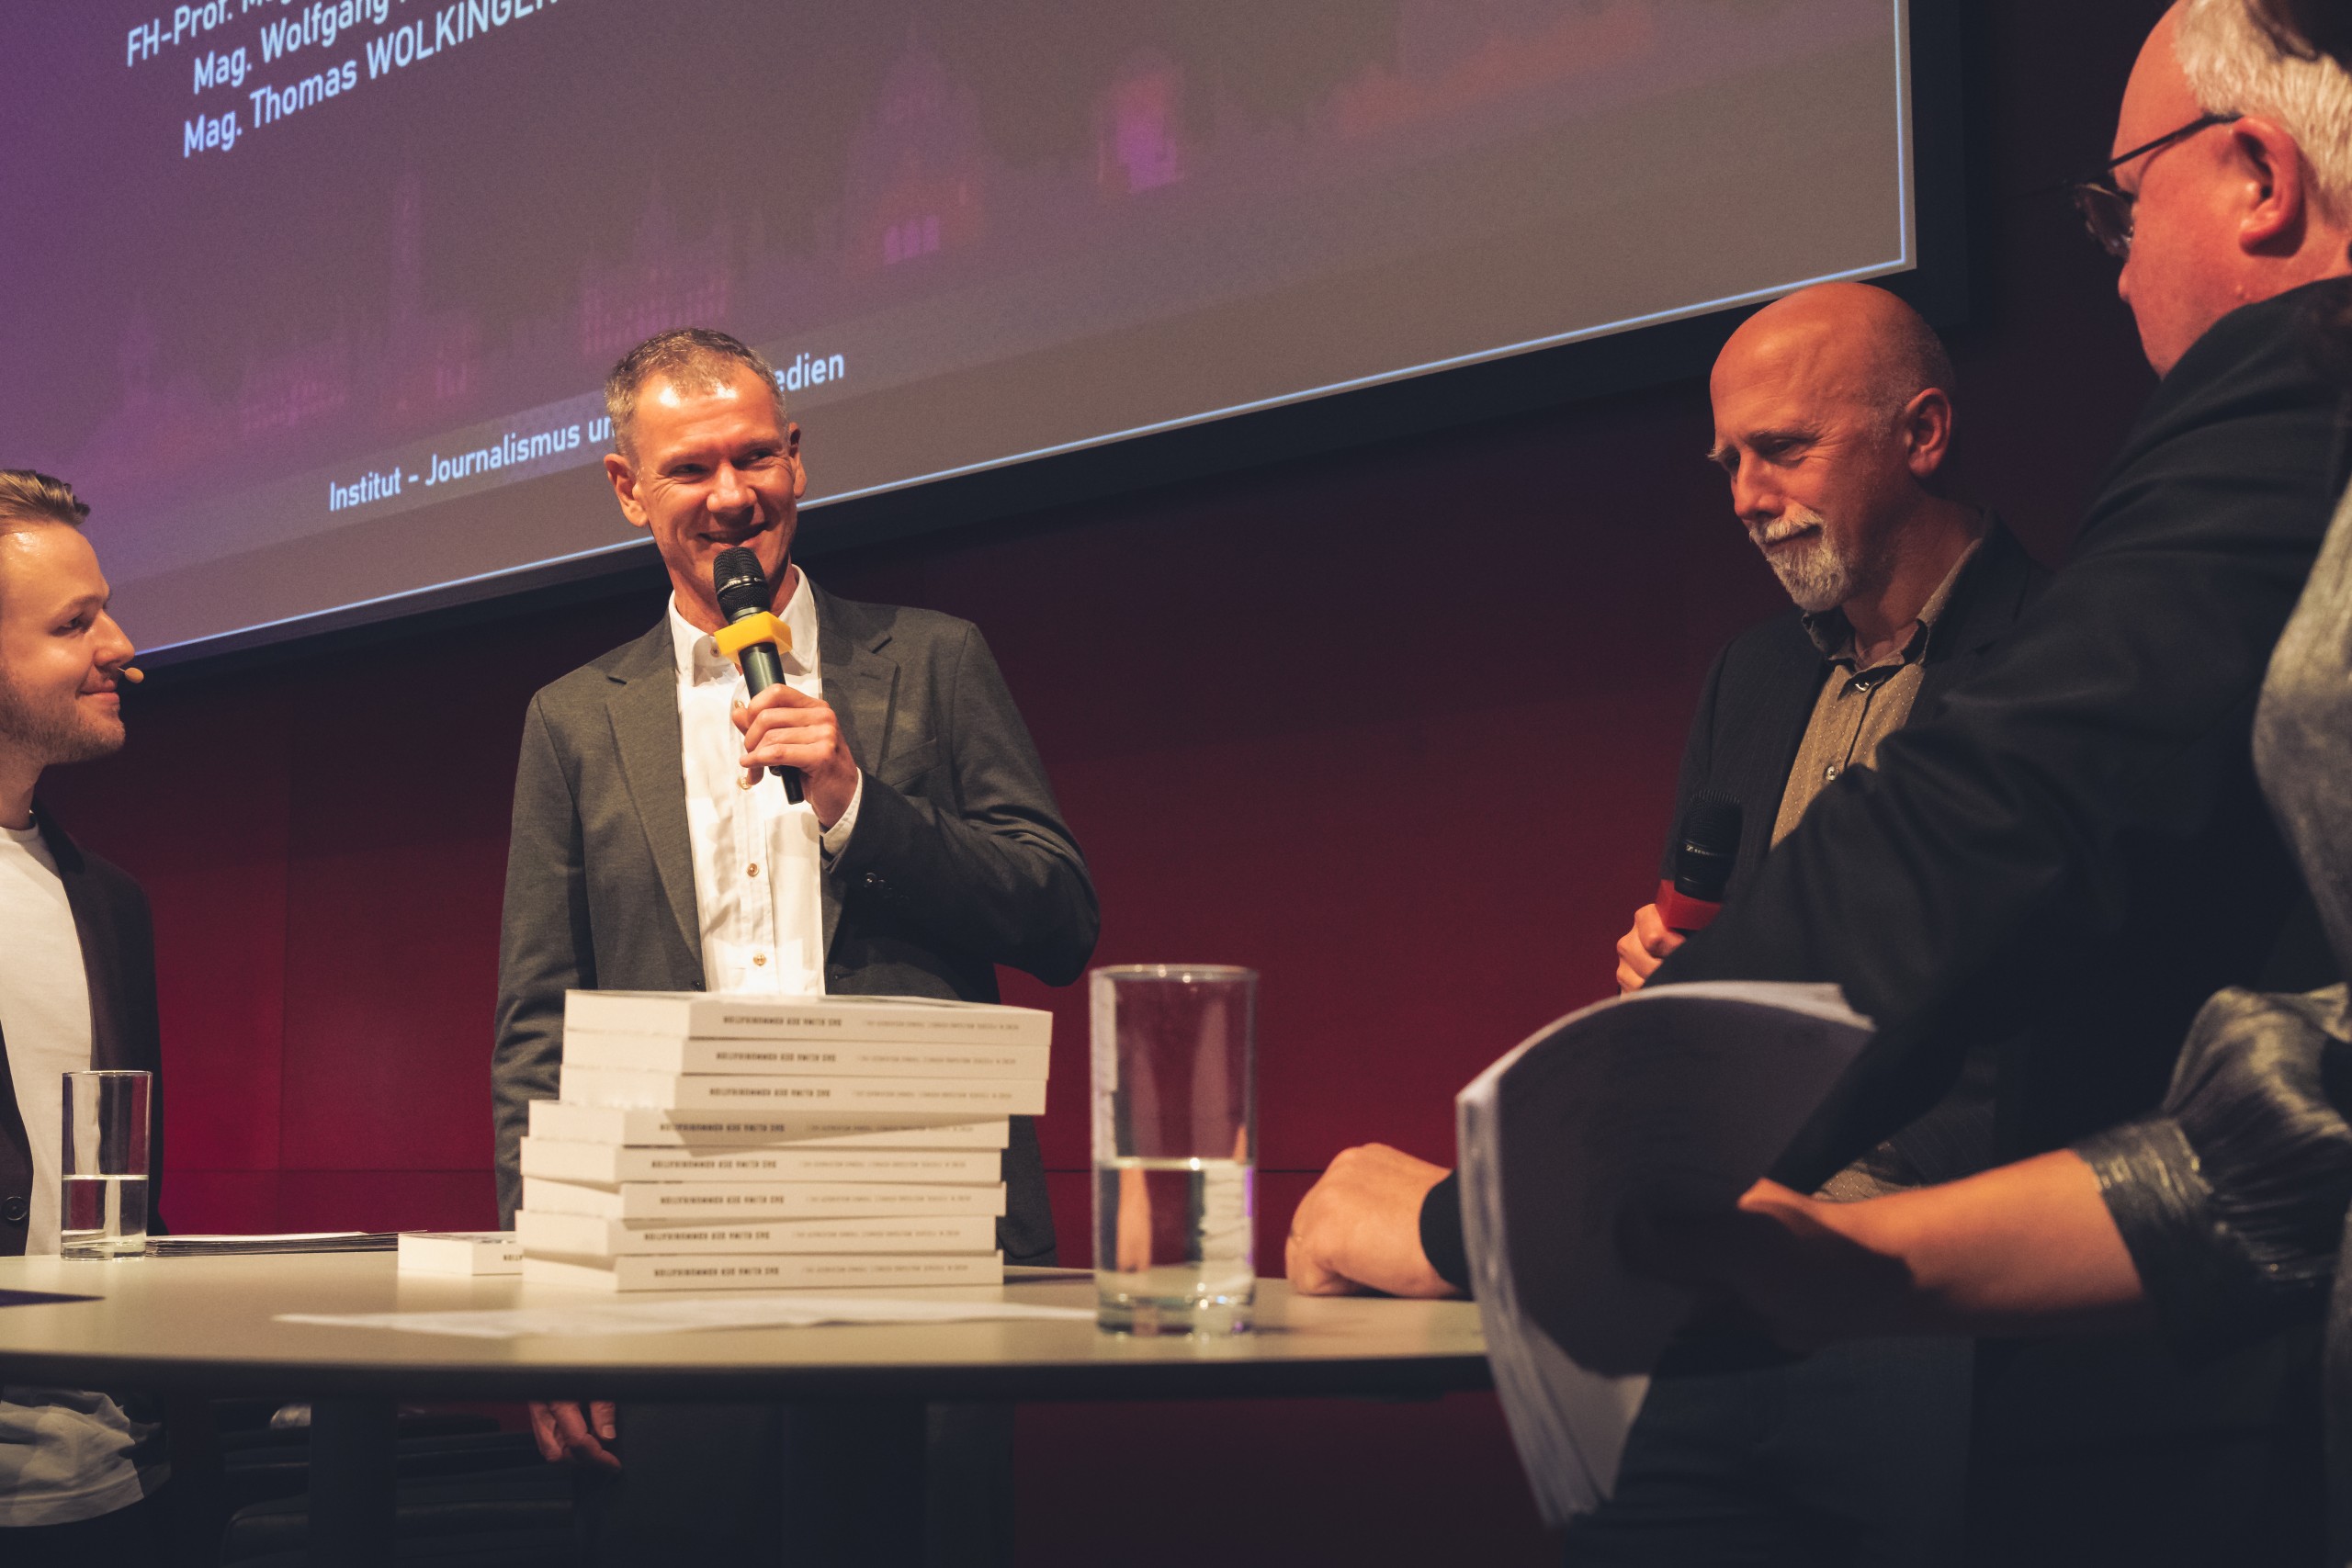 Moderator Patrick Schlauer with Wolfgang Kühnelt, Thomas Wolkinger and Heinz M. Fischer at the book launch.